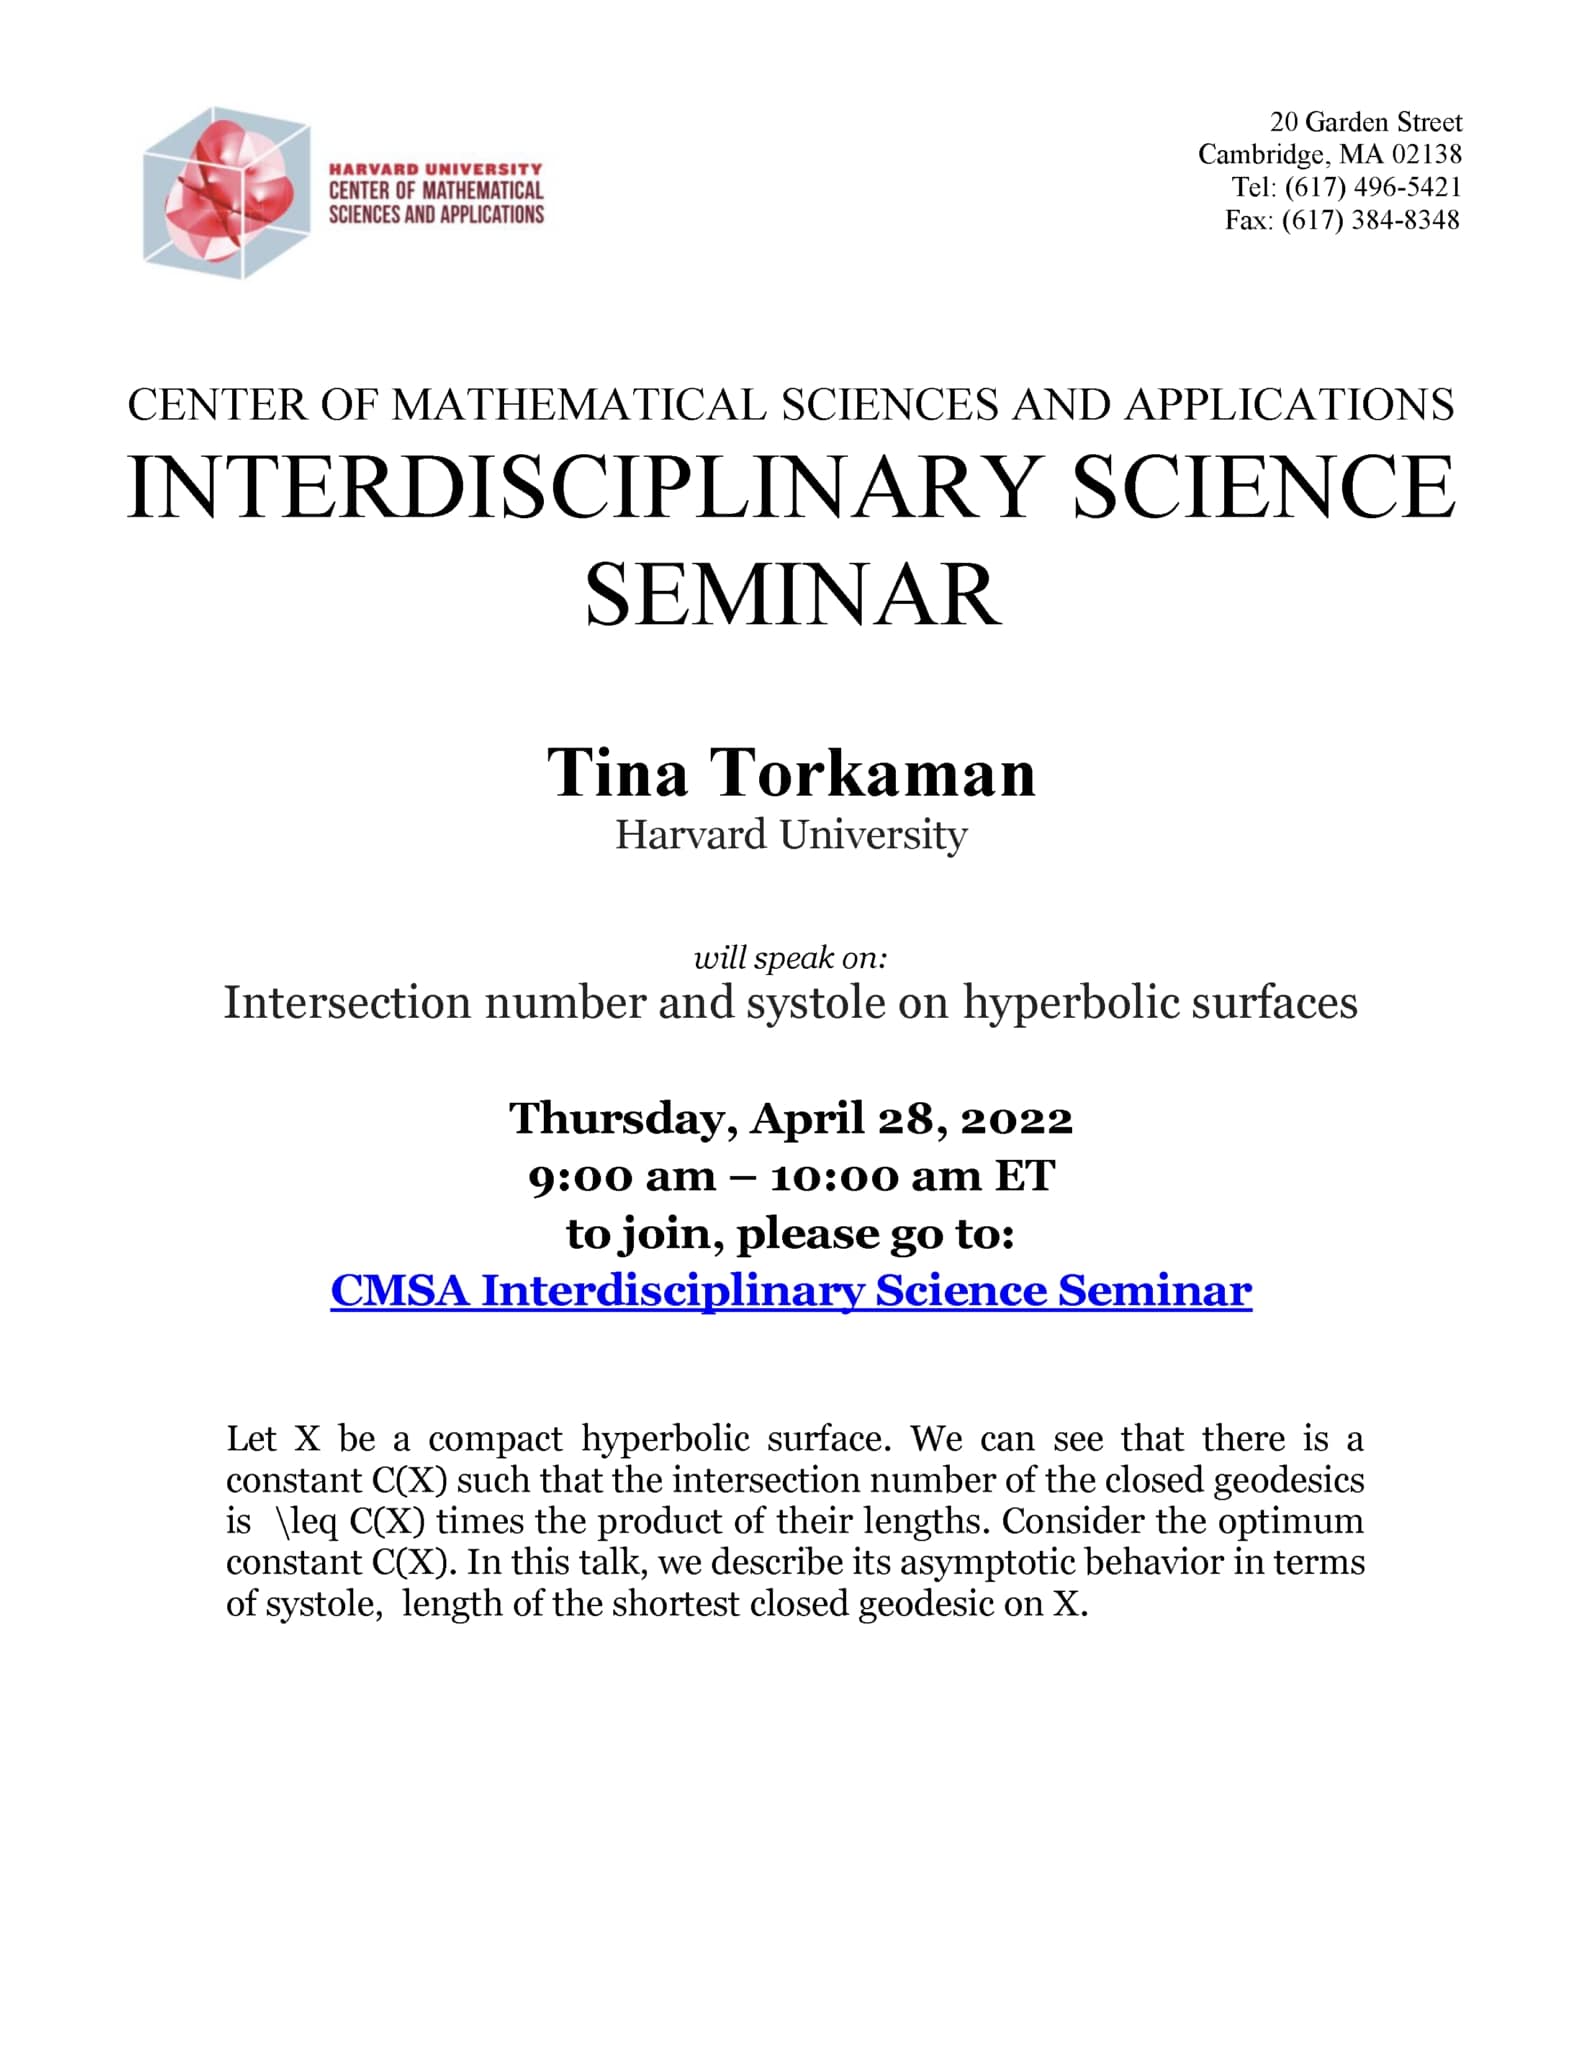 CMSA-Interdisciplinary-Science-Seminar-04.28.22-1583x2048-1